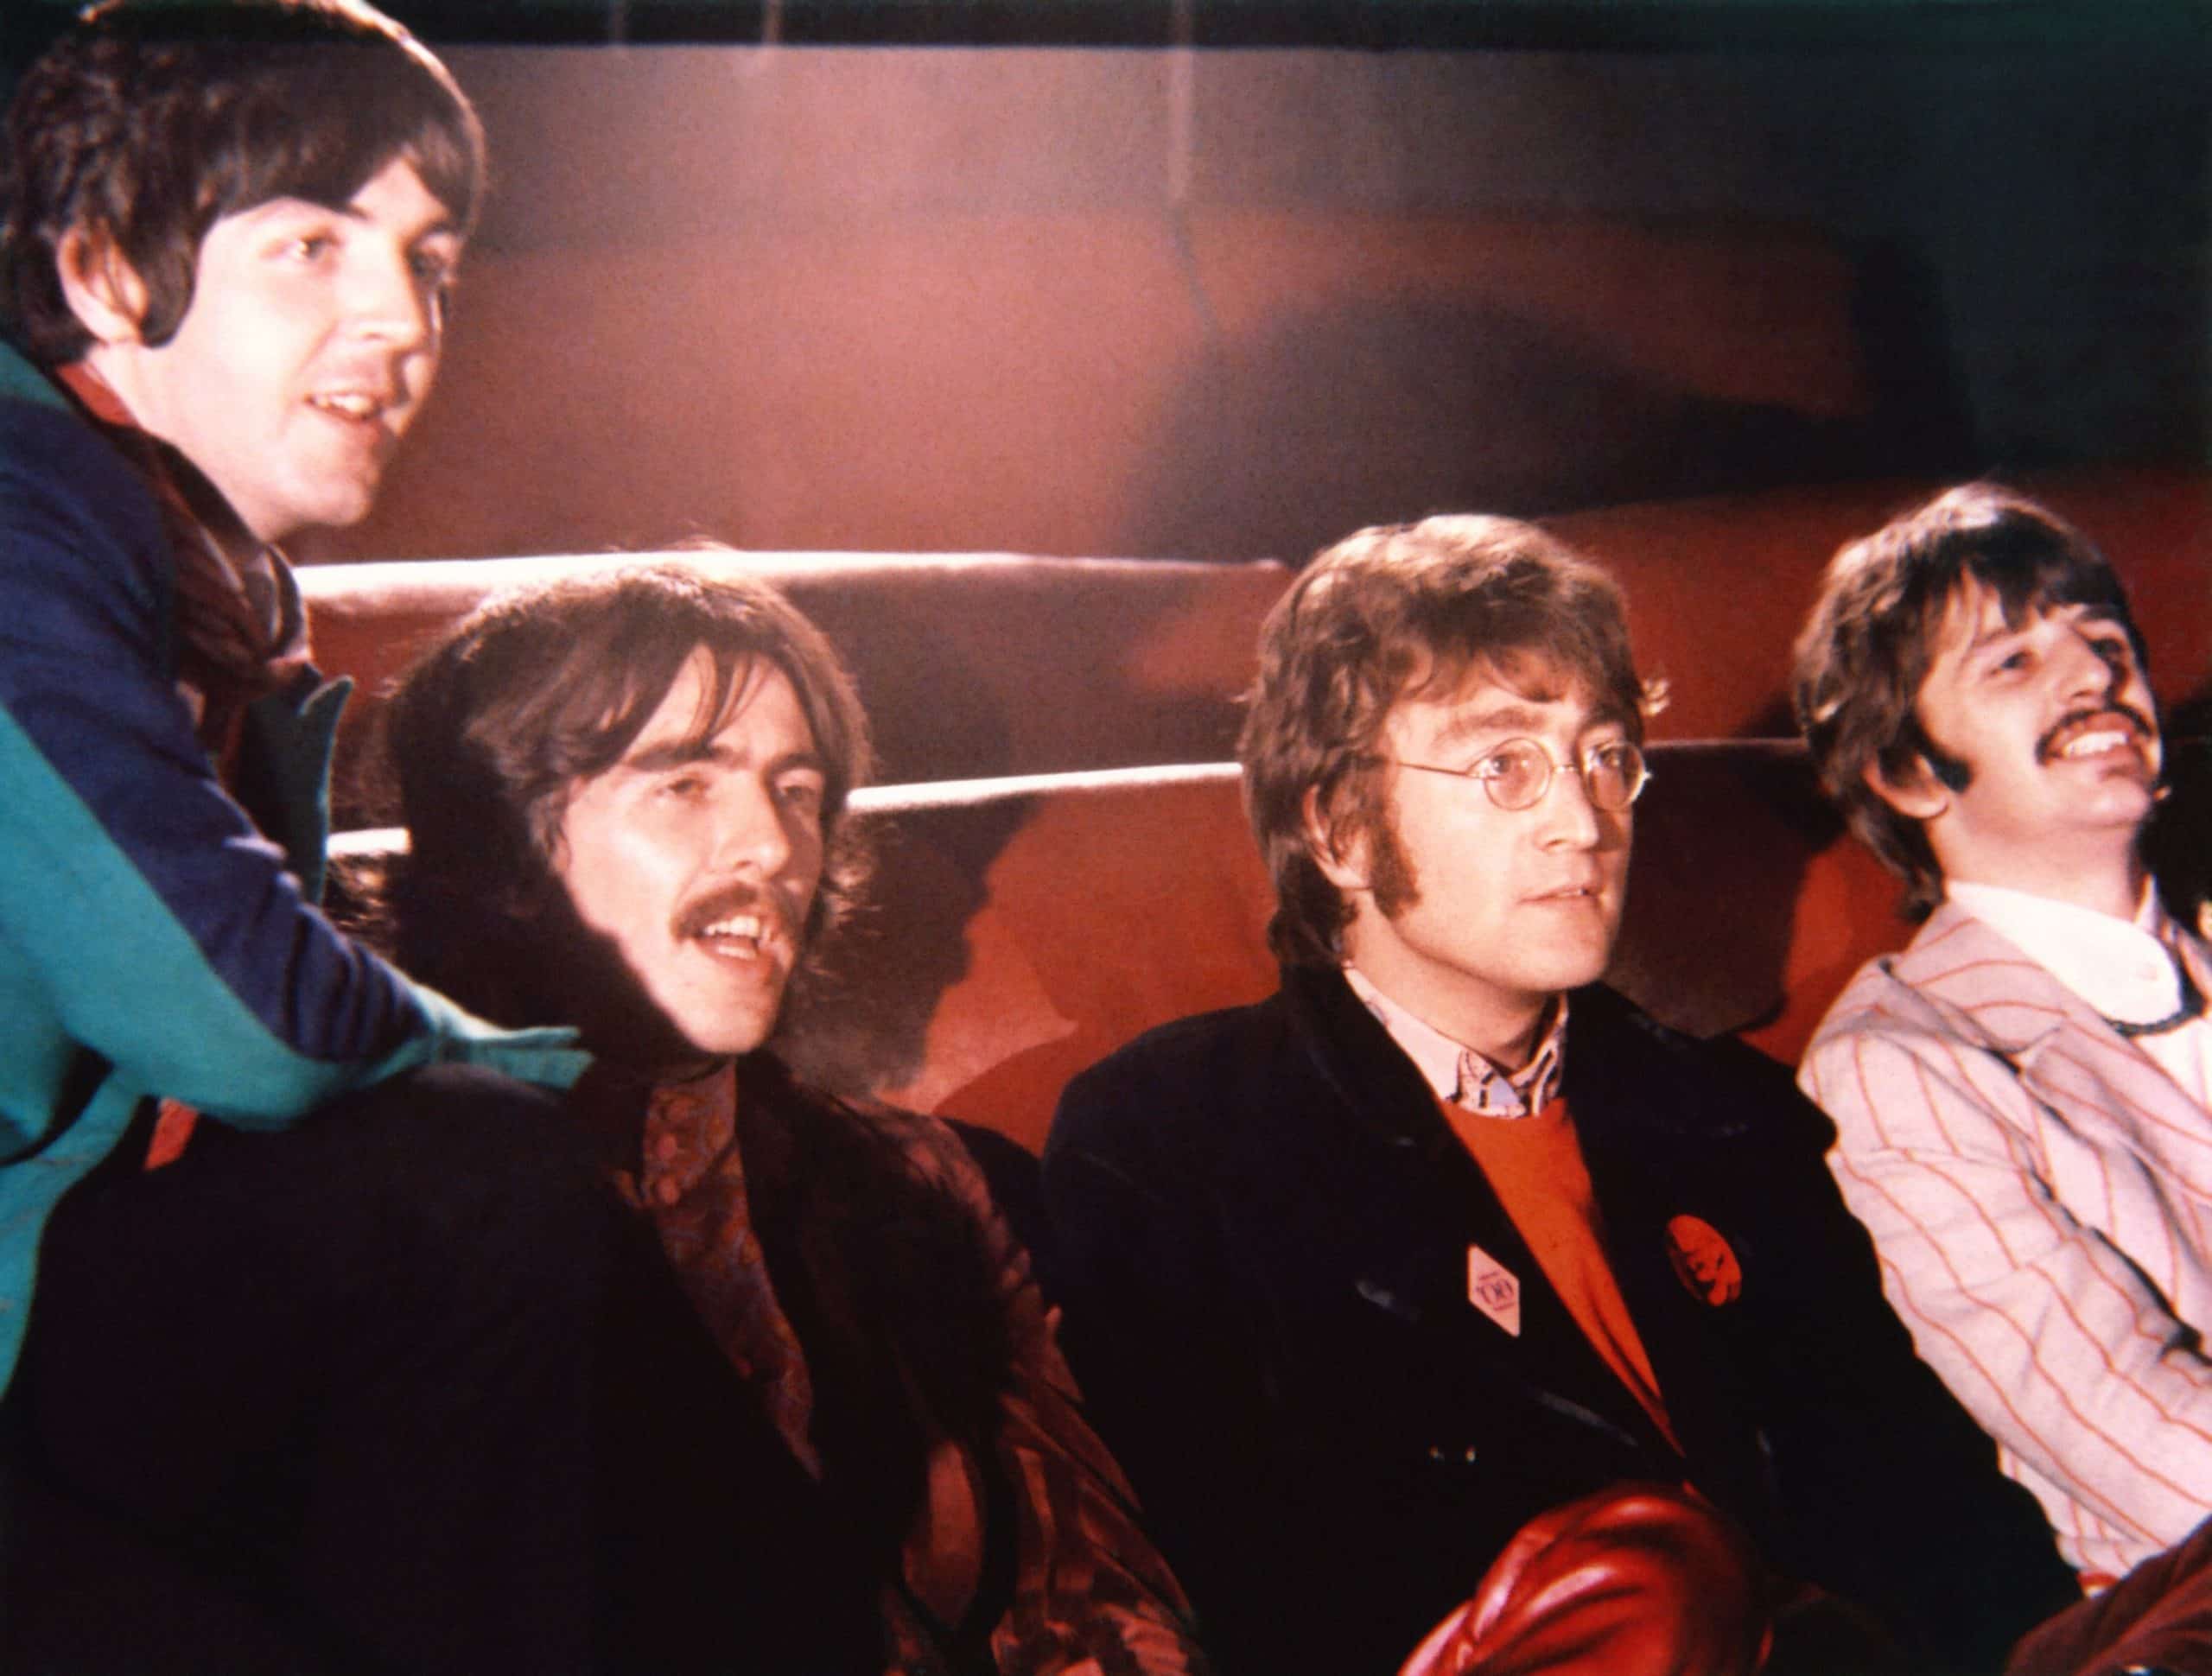 YELLOW SUBMARINE, from left: Paul McCartney, George Harrison, John Lennon, Ringo Starr, 1968 